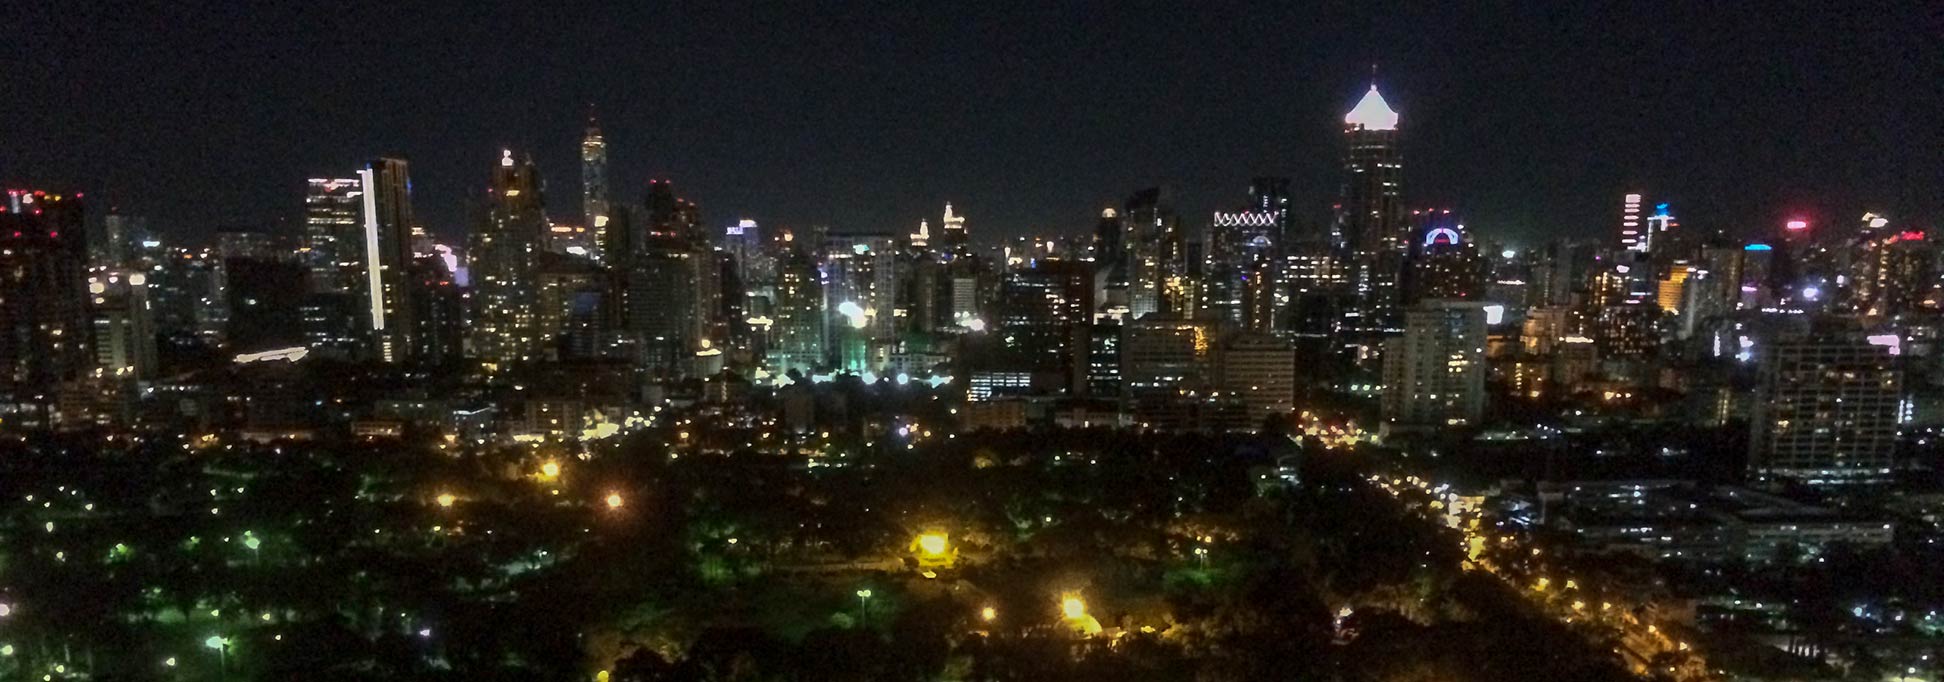 Bangkok at night, seen from State Tower